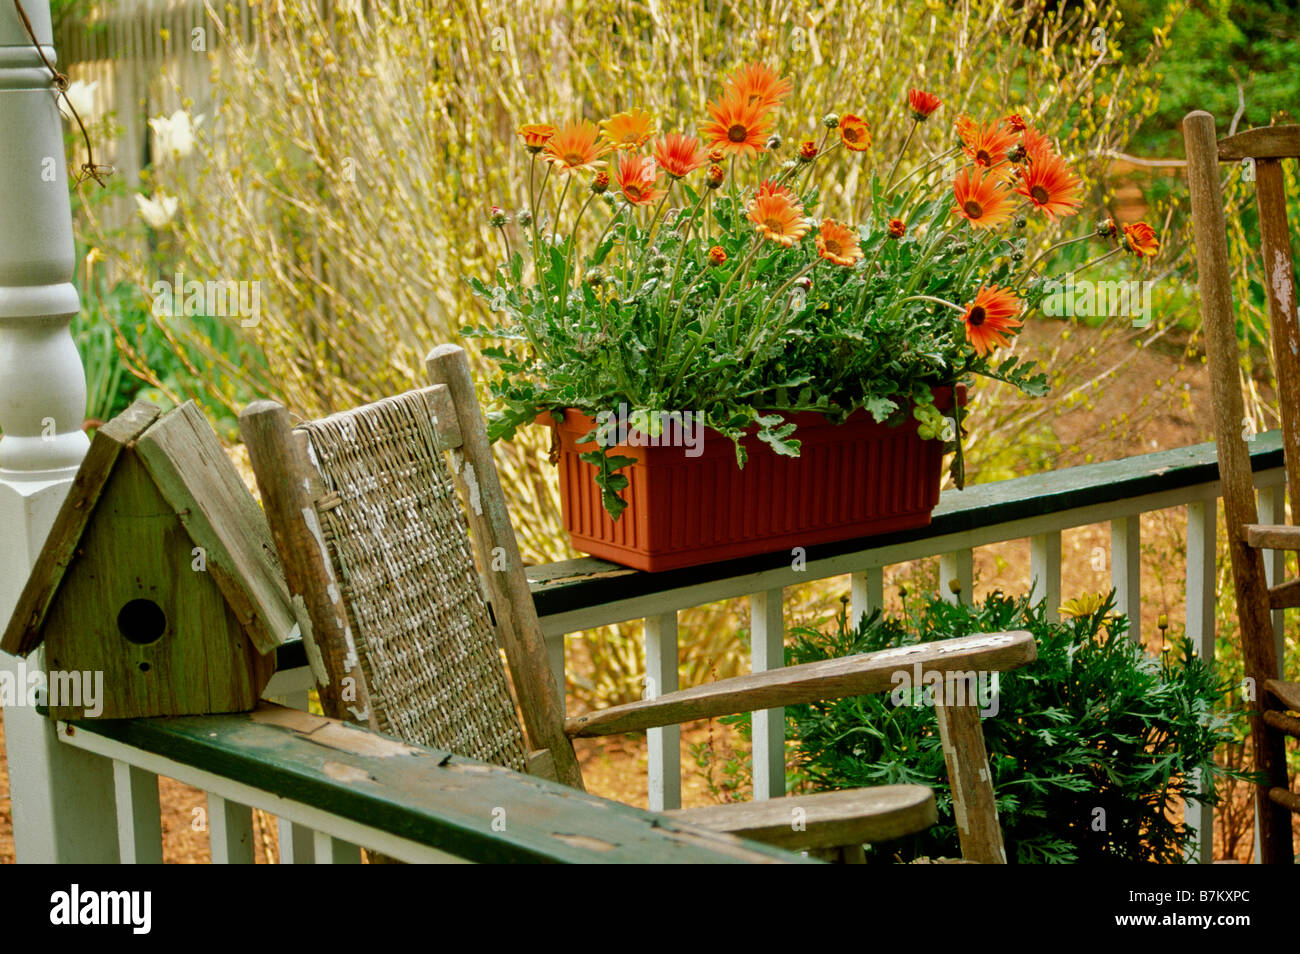 African Daisy (Arctotis x hybrida) growing in a windowbox planter adorns a porch railing in a cottage garden. Stock Photo